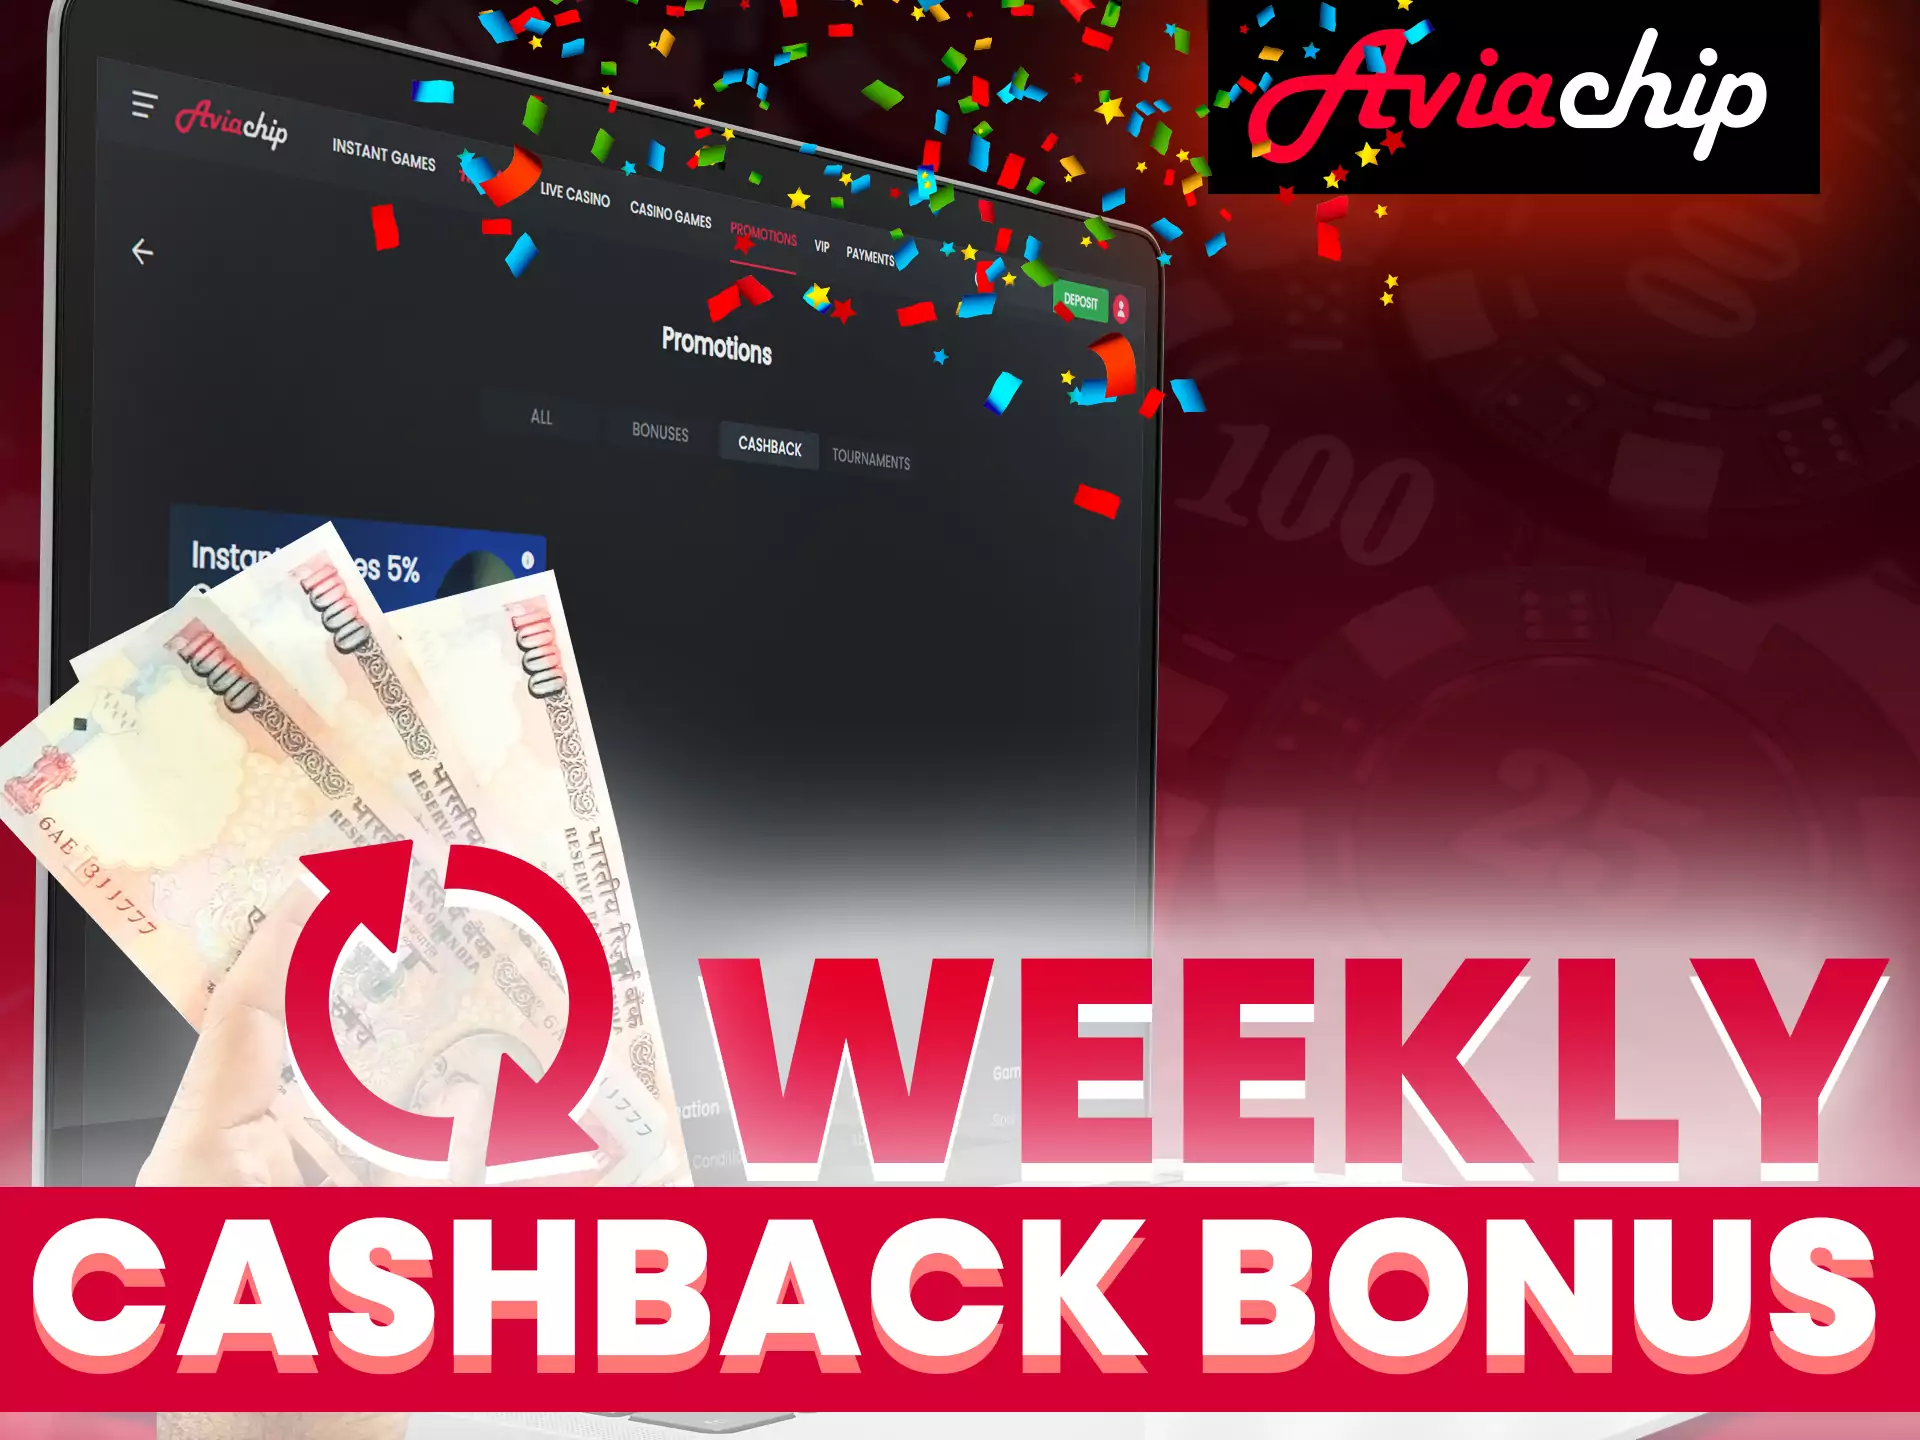 Get bonus cashback every week at Aviachip.